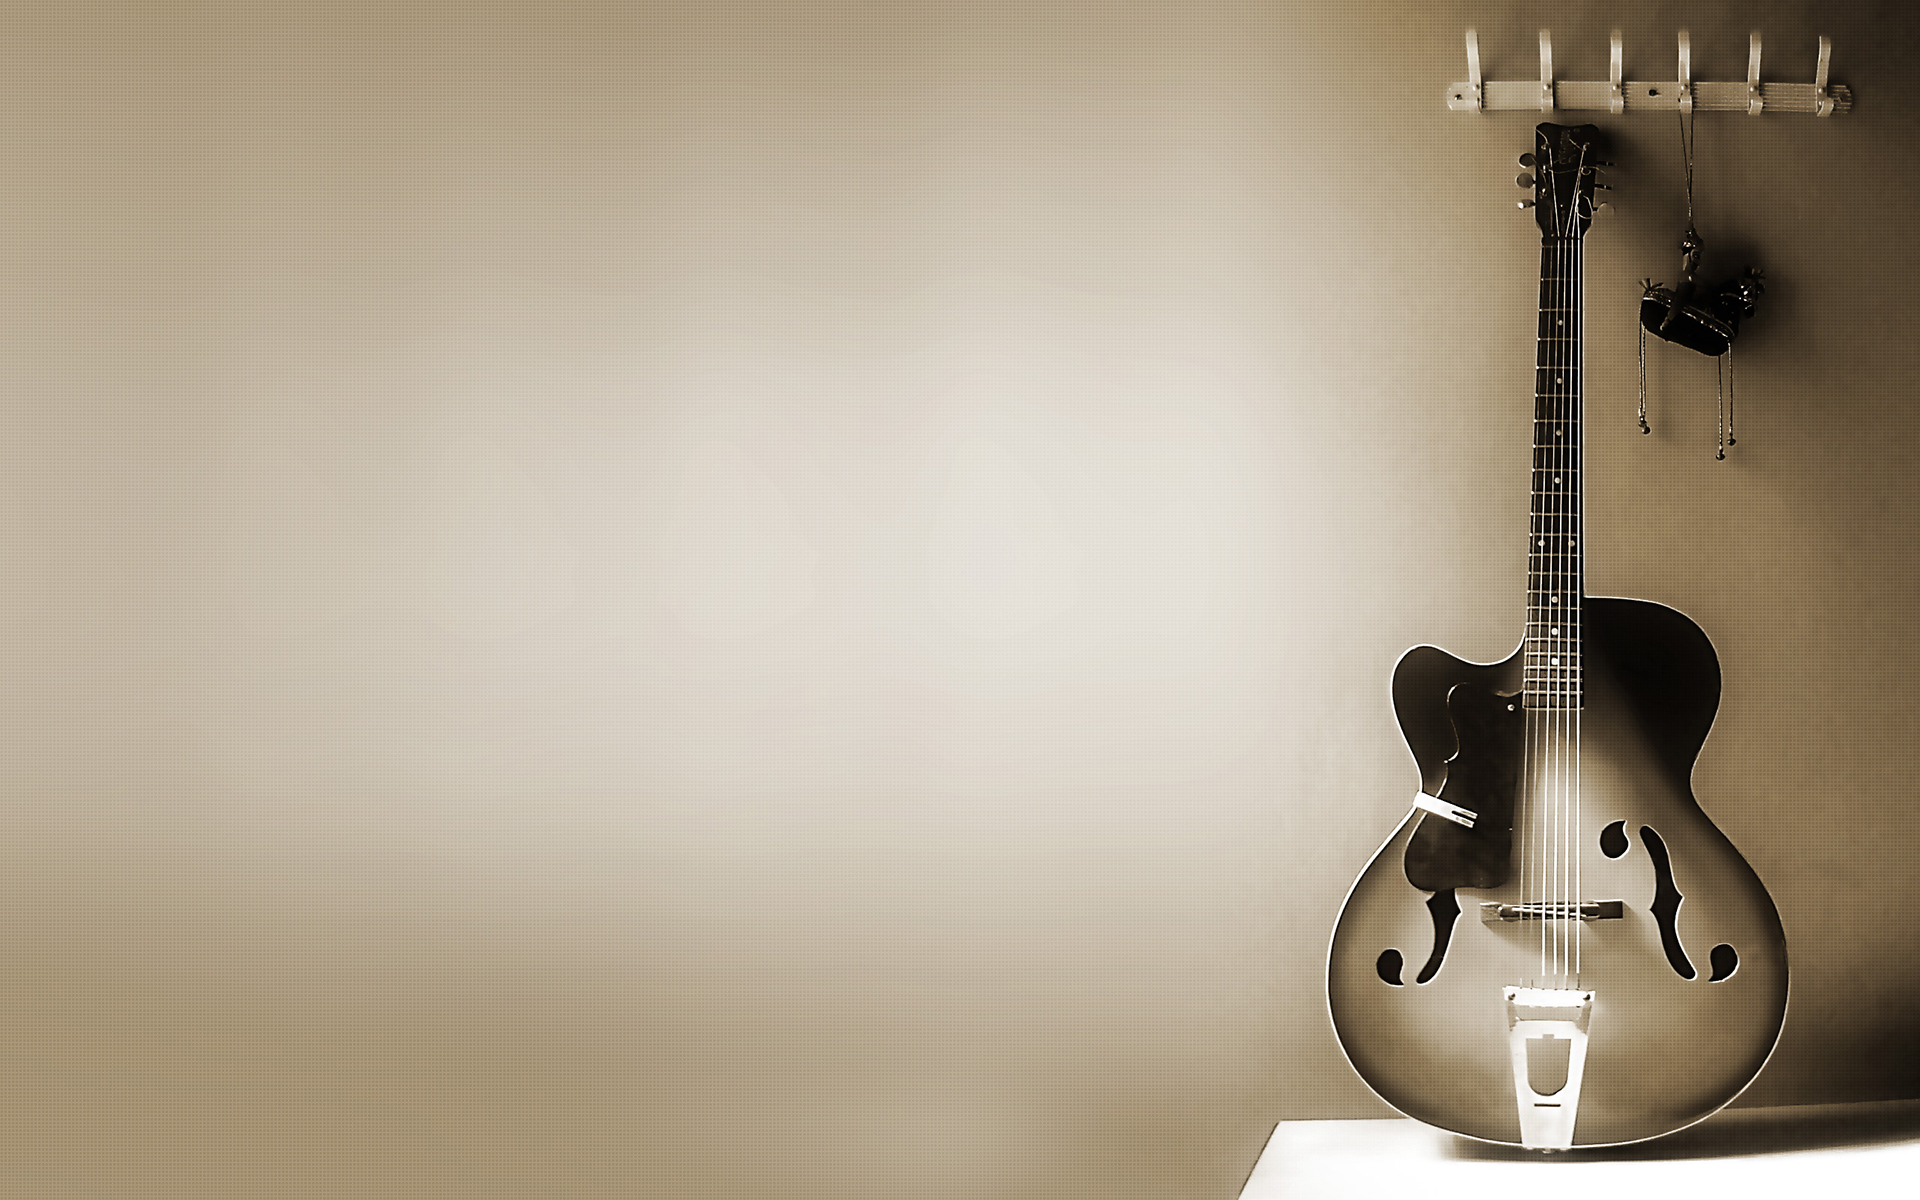 Acoustic Guitar Wallpaper High Resolution For Desktop